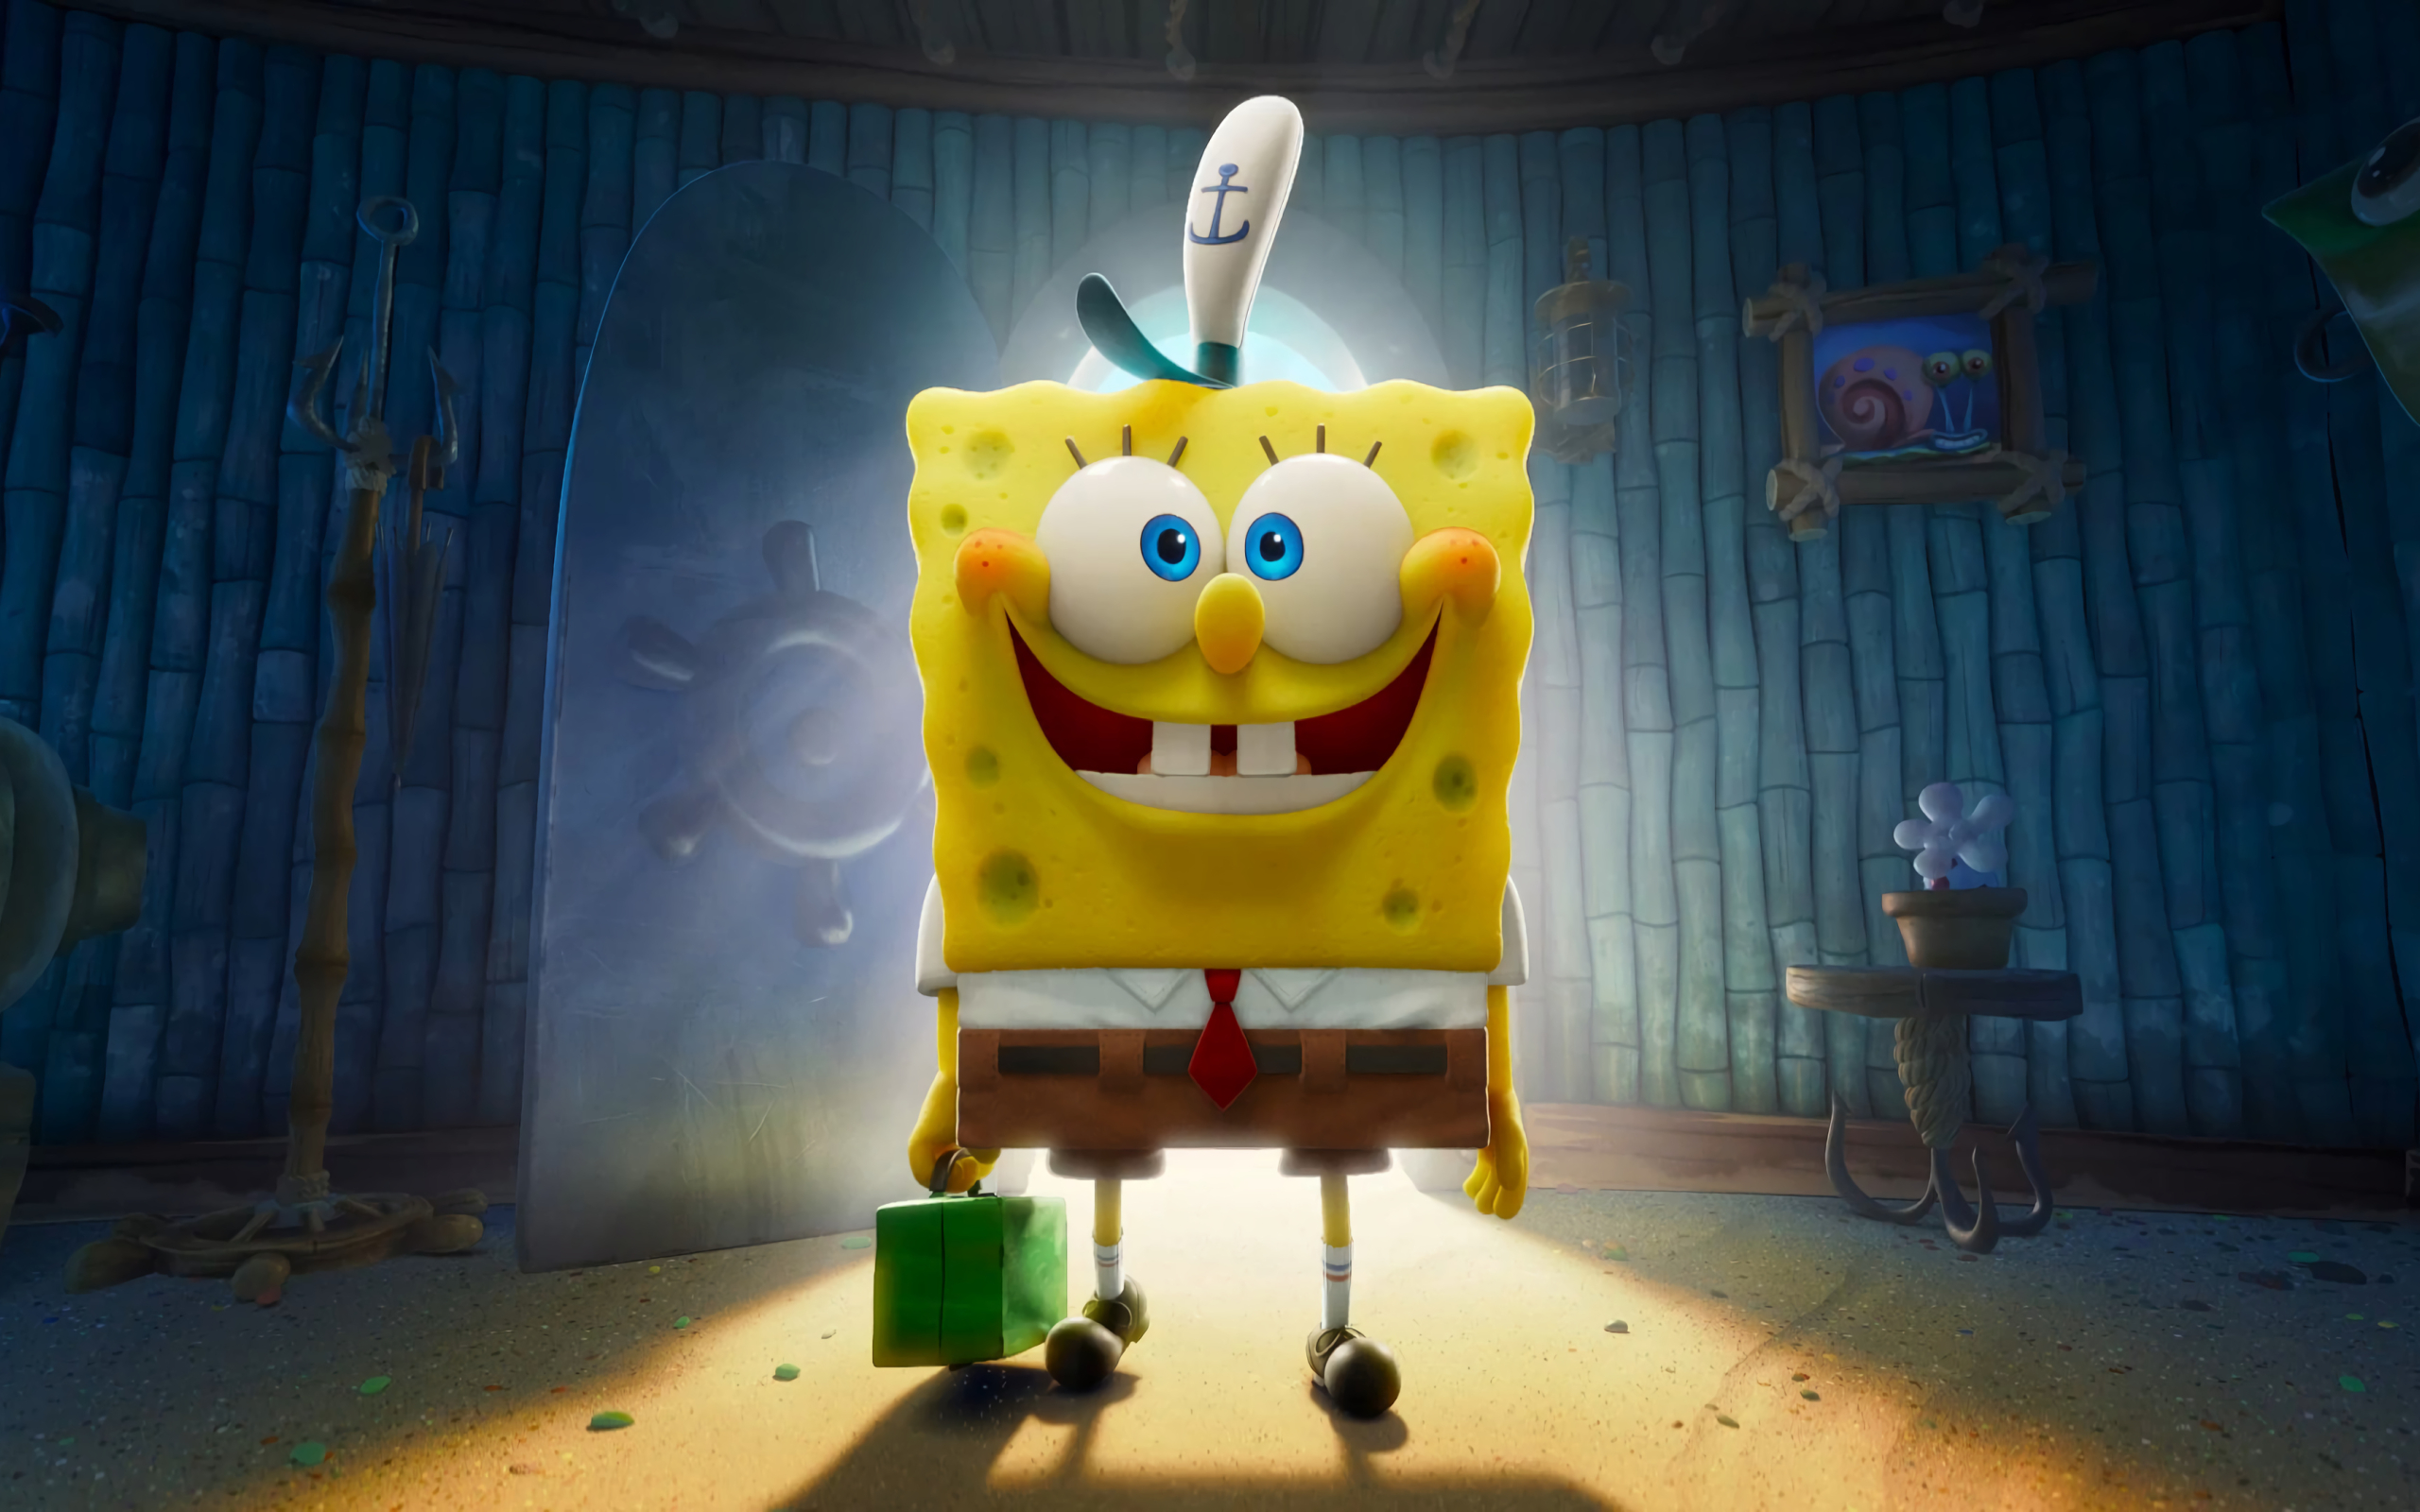 2560x1600 The Spongebob Movie Sponge On The Run 2560x1600 Images, Photos, Reviews